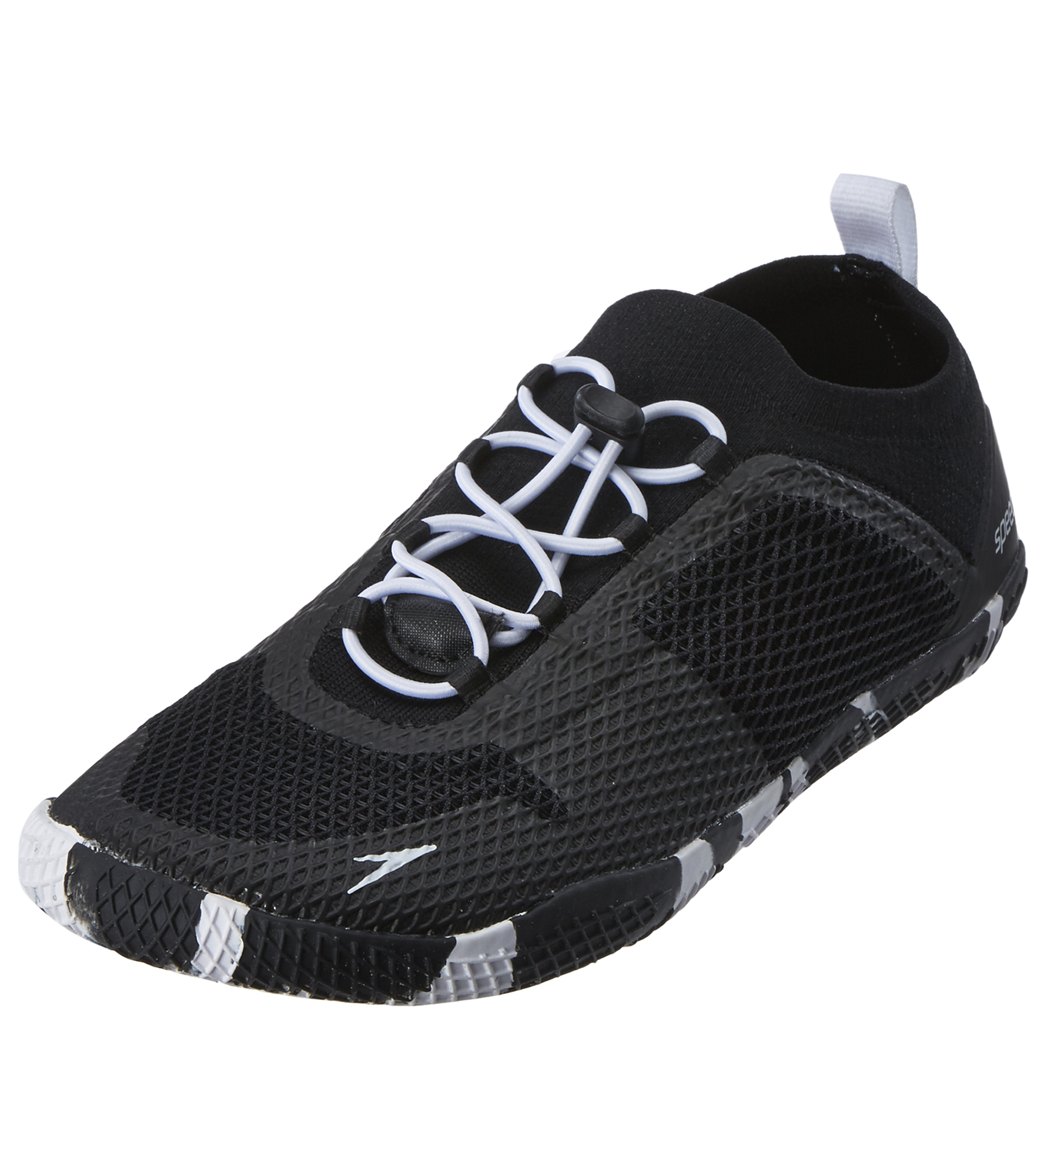 Speedo Men' Fathom Aq Water Shoe - Black/White 8 - Swimoutlet.com